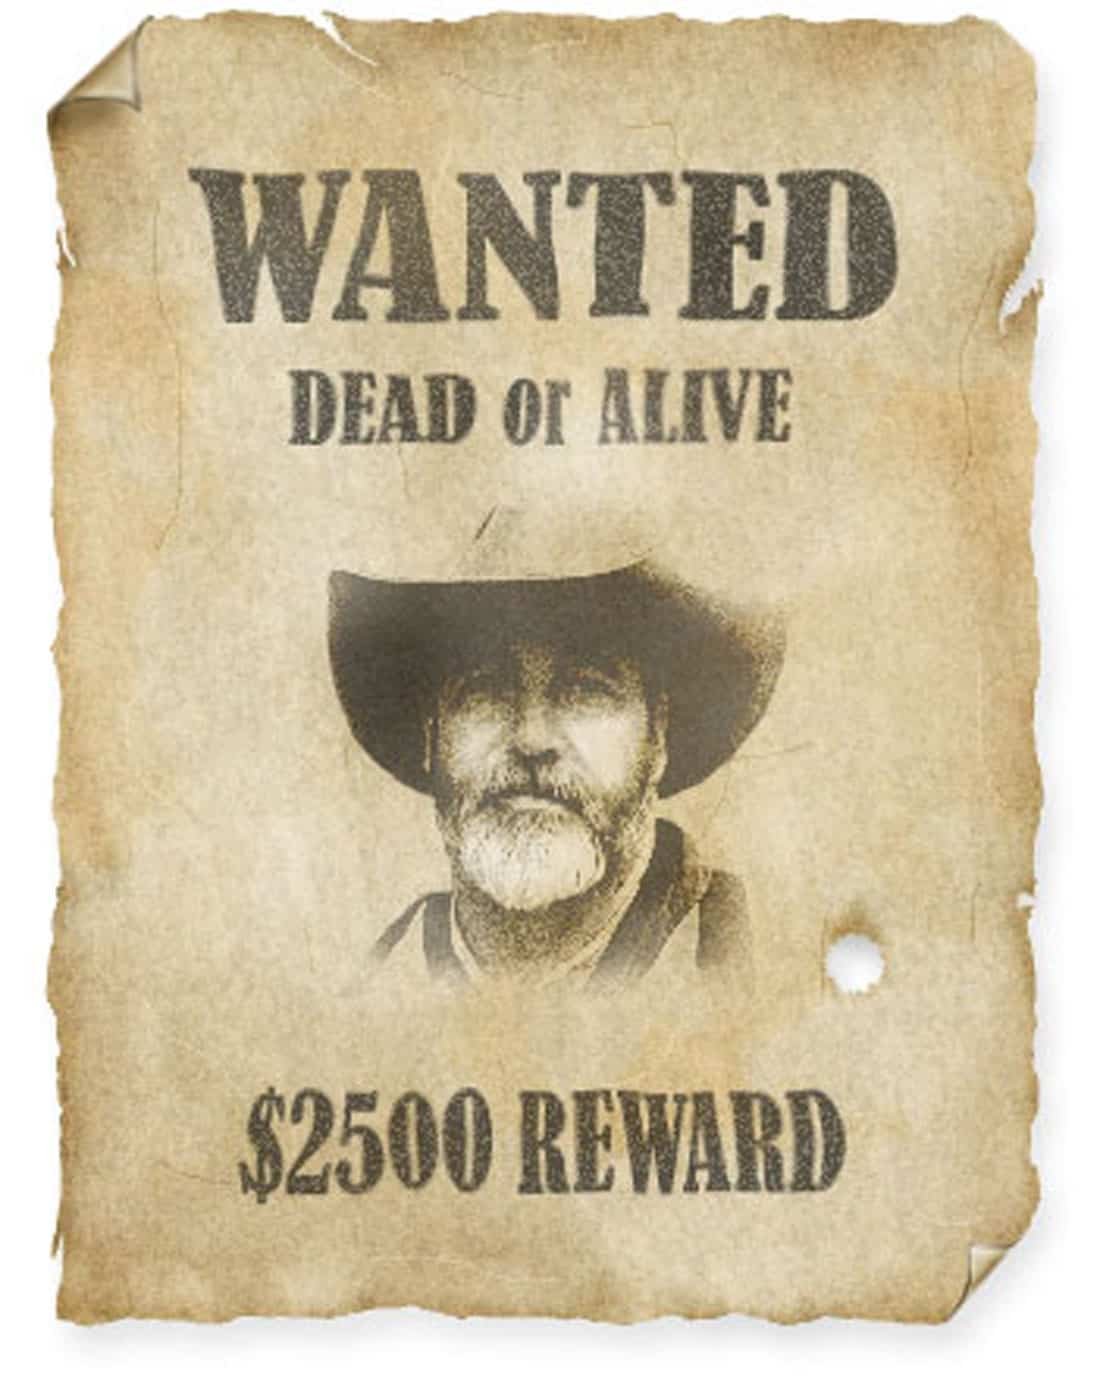 Обложка wanted. Wanted плакат. Плакат розыска дикий Запад. Wanted листовка. Плакат разыскивается.